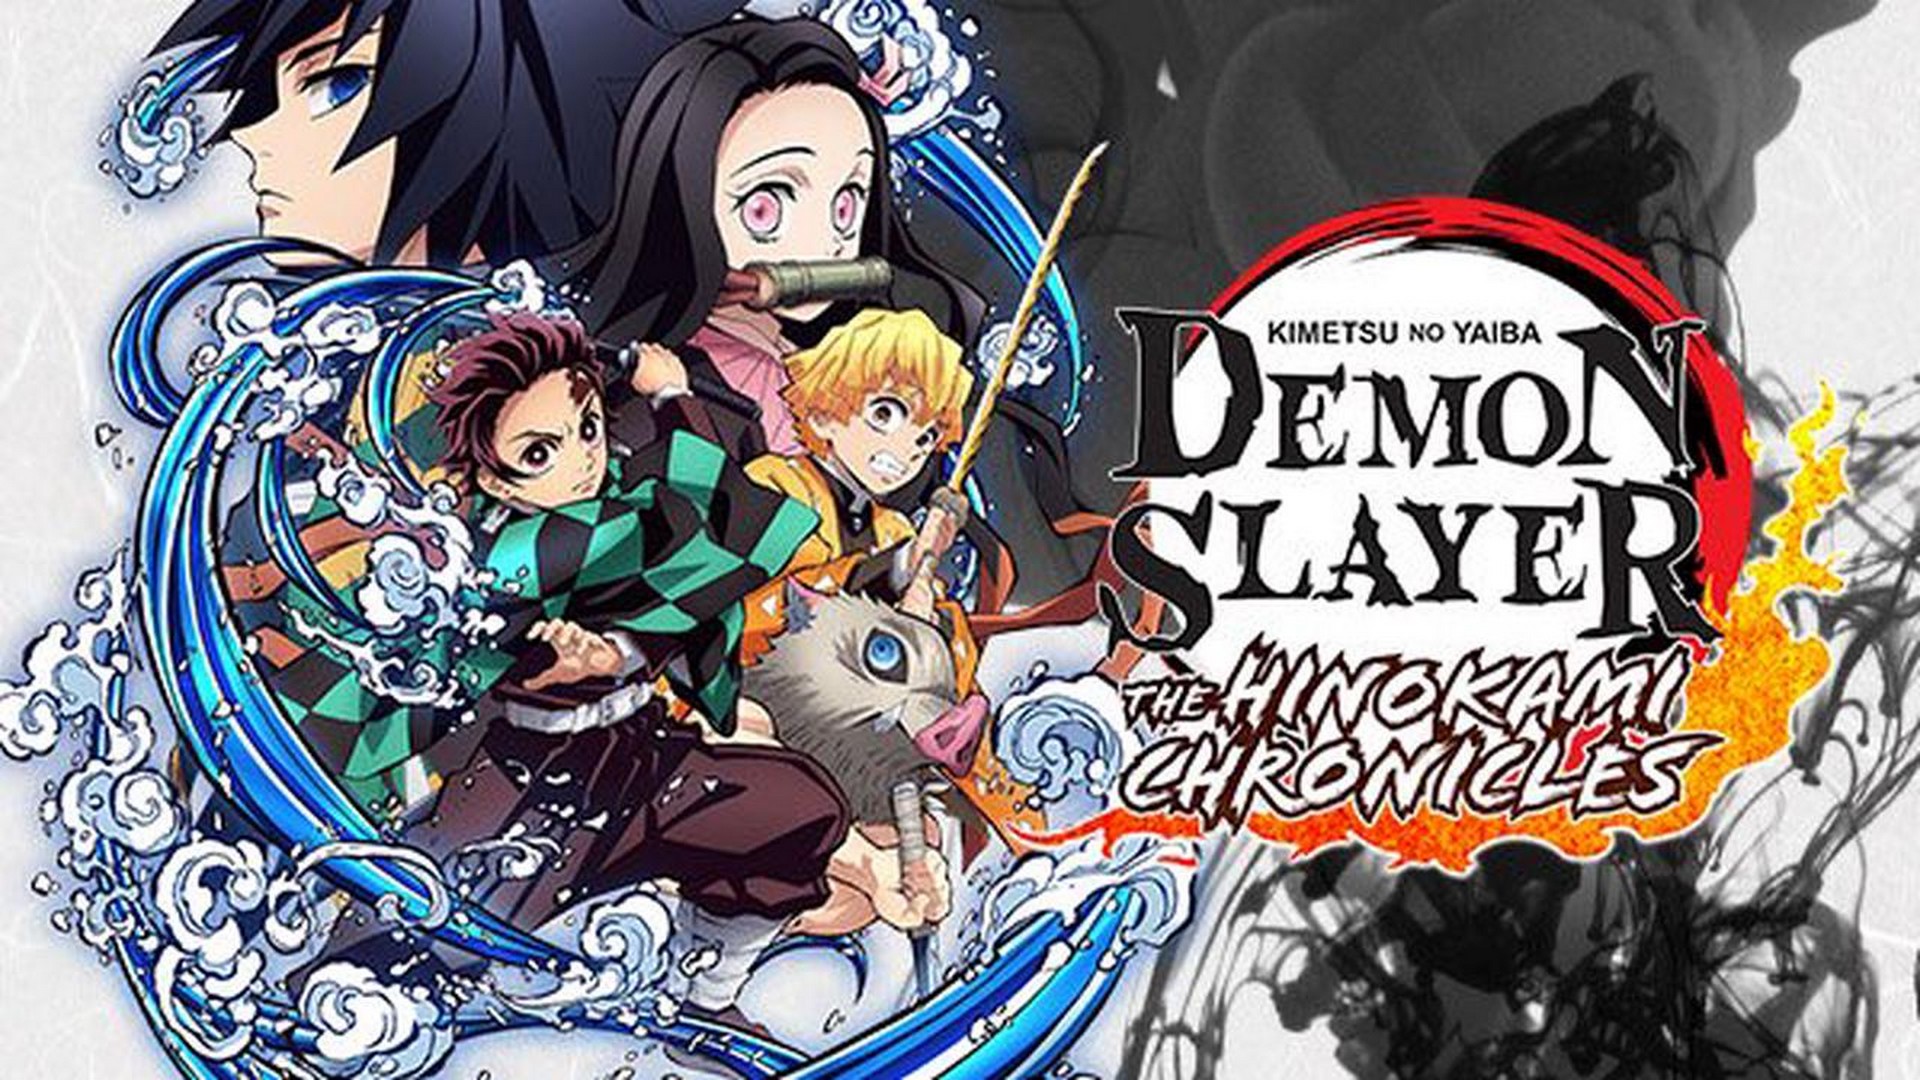 Demon Slayer: Kimetsu no Yaiba - The Hinokami Chronicles - PlayStation 5